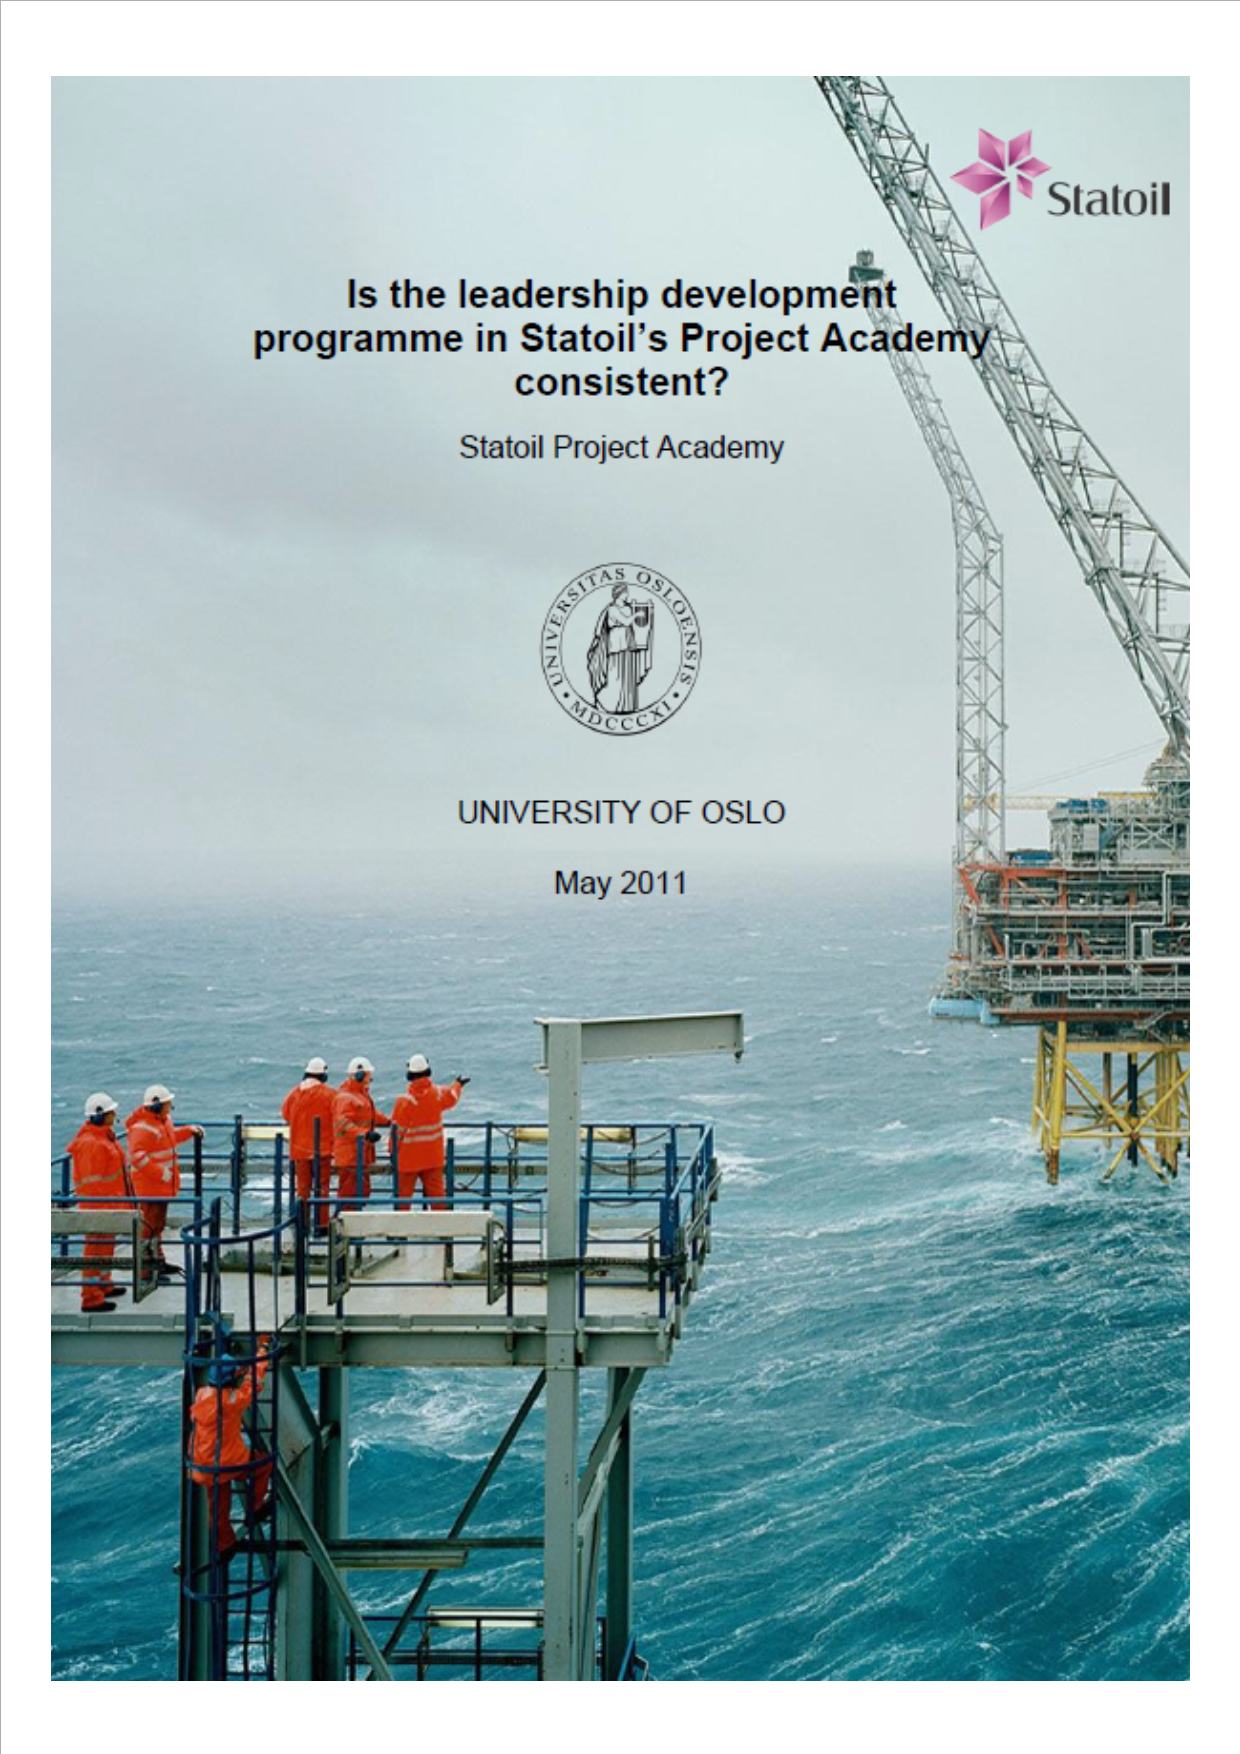 Statoil: The leadership development programme